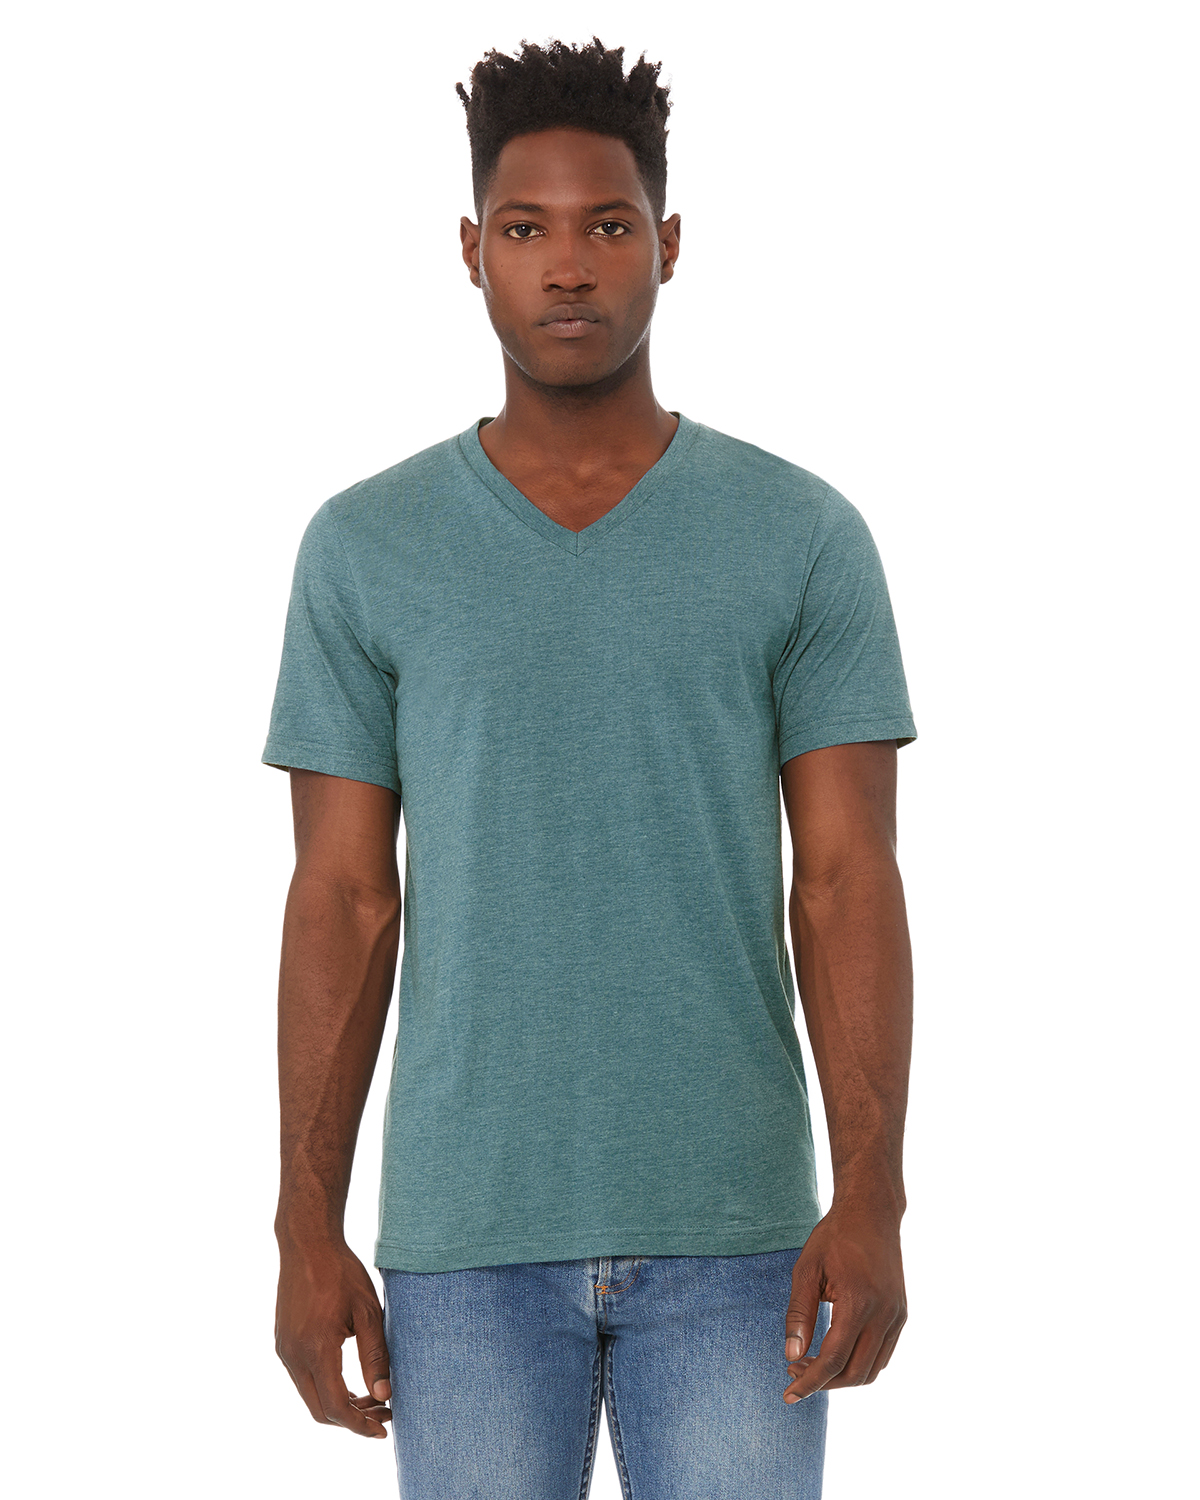 The Gusted Unisex Short Sleeve V-Neck T-Shirt